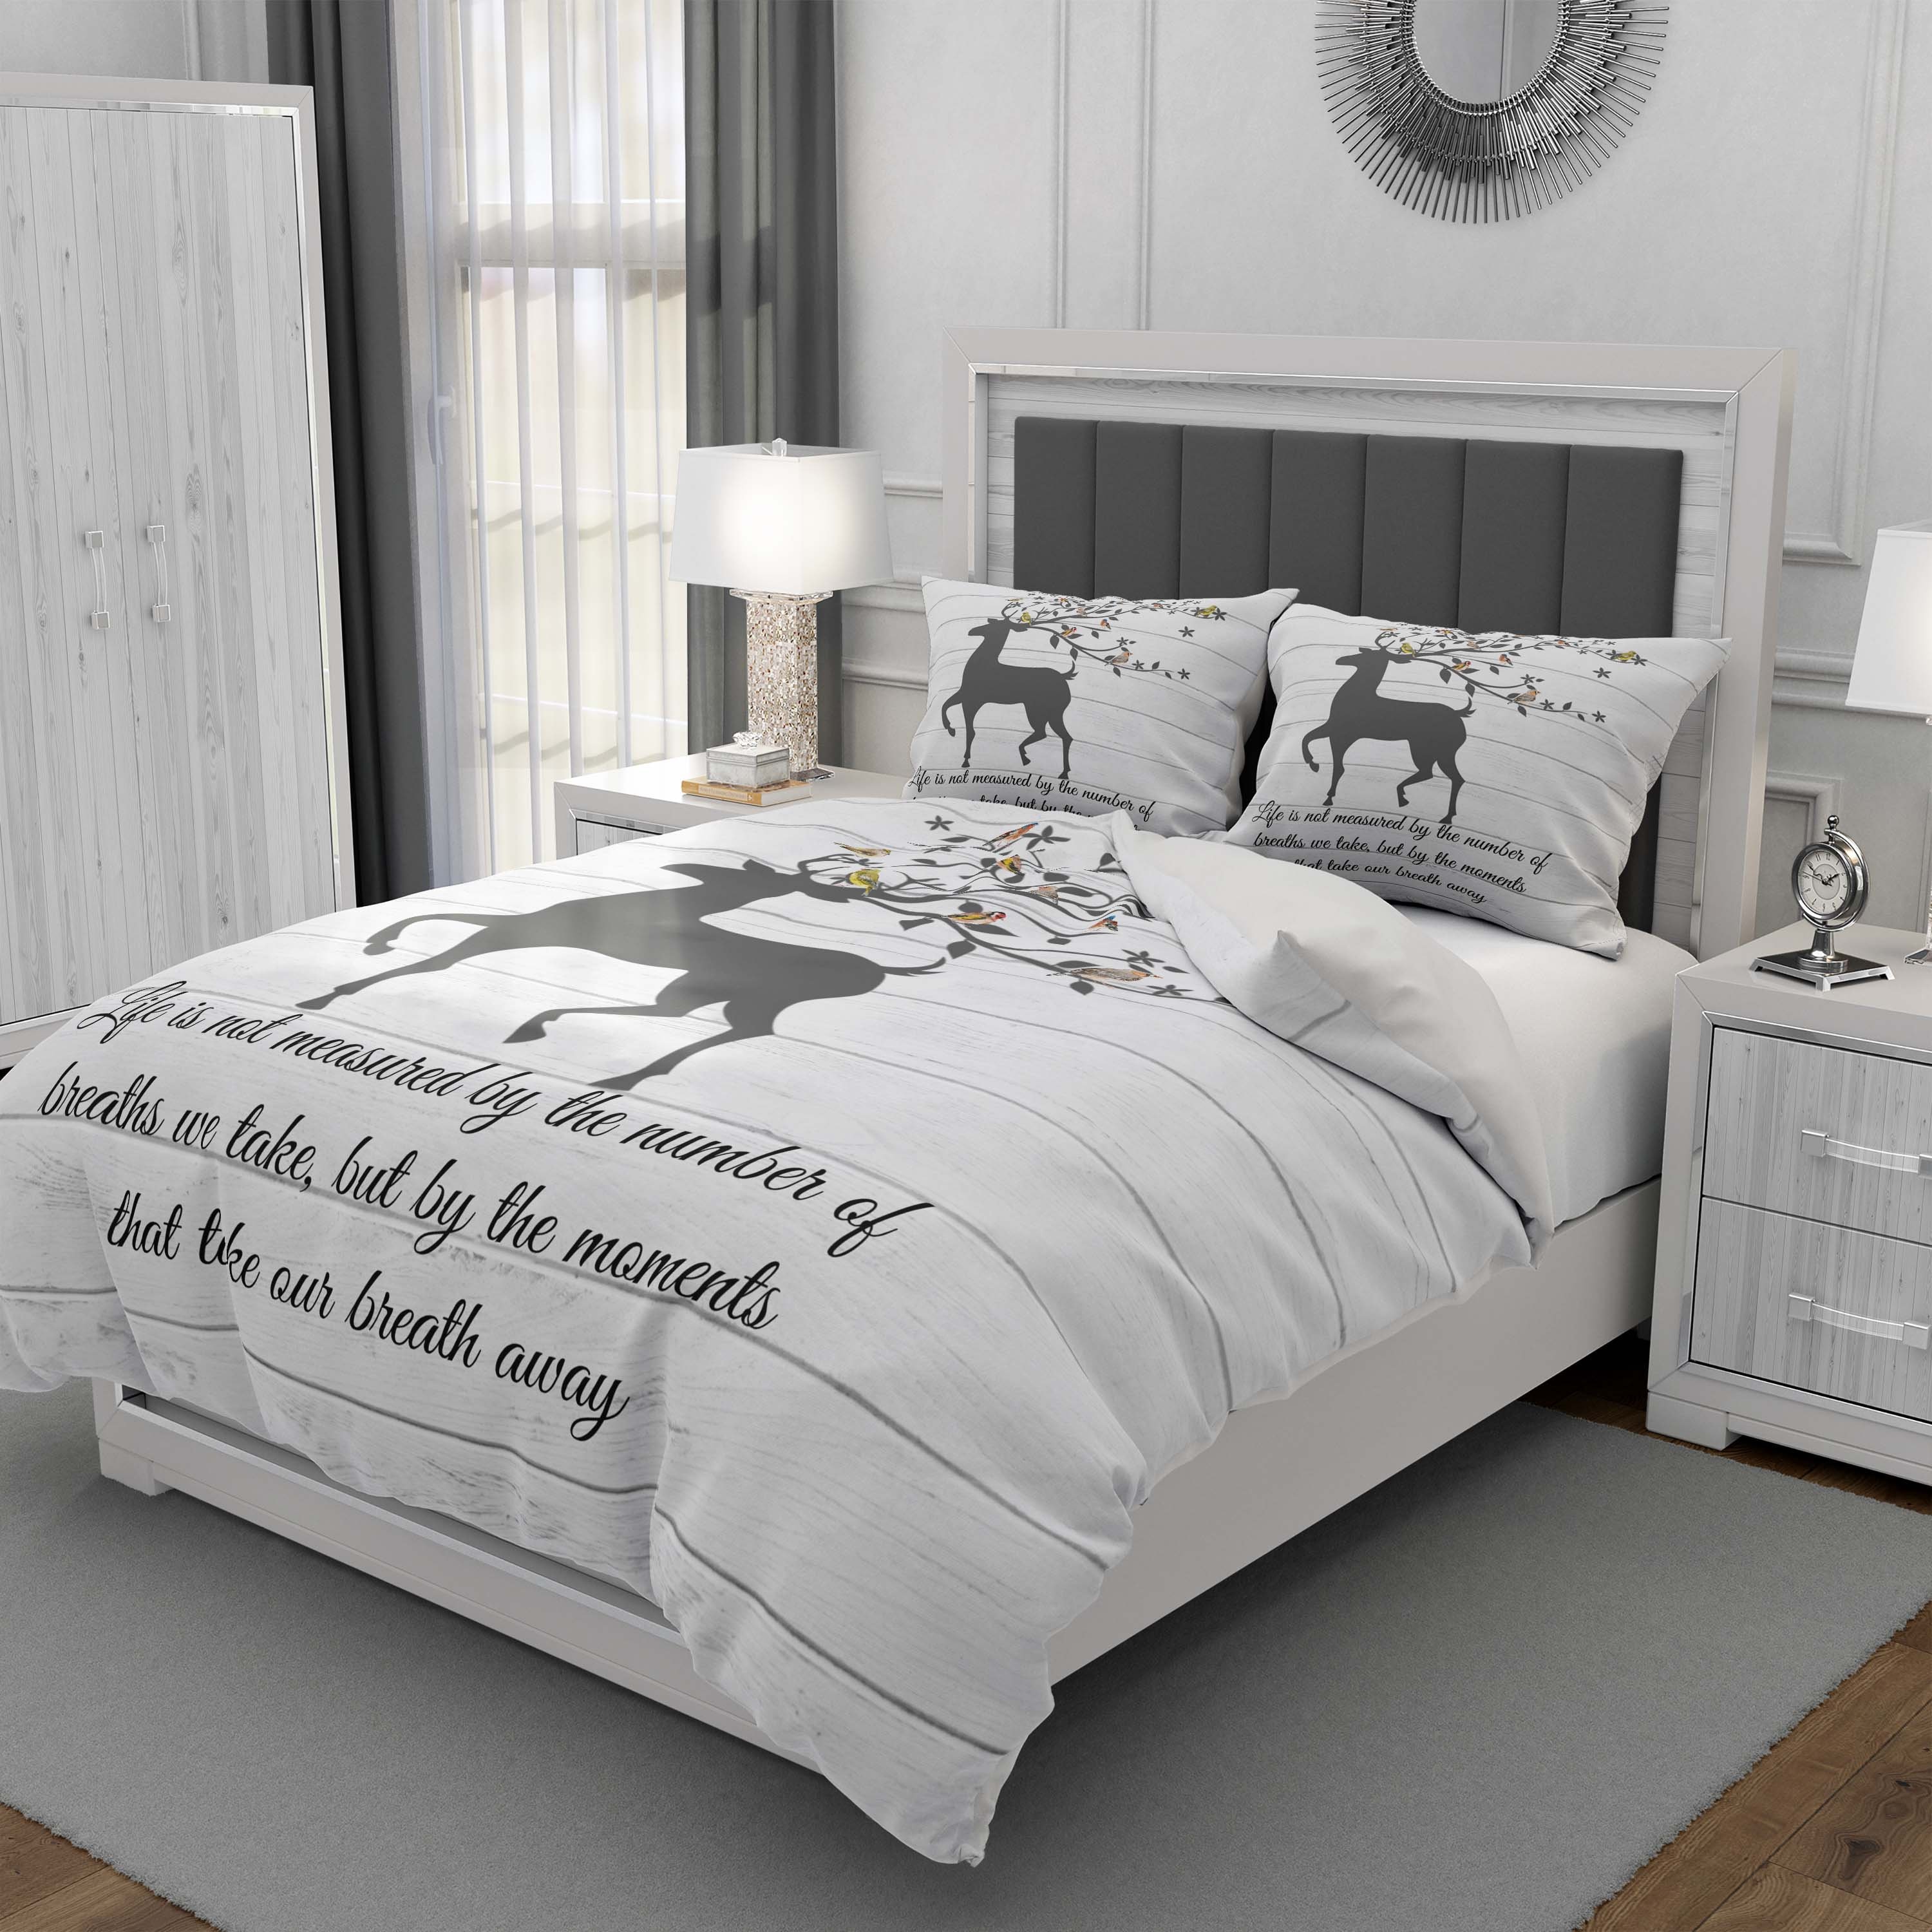 Rustic Farmhouse Bedding Comforter Duvet Cover Pillow Shams